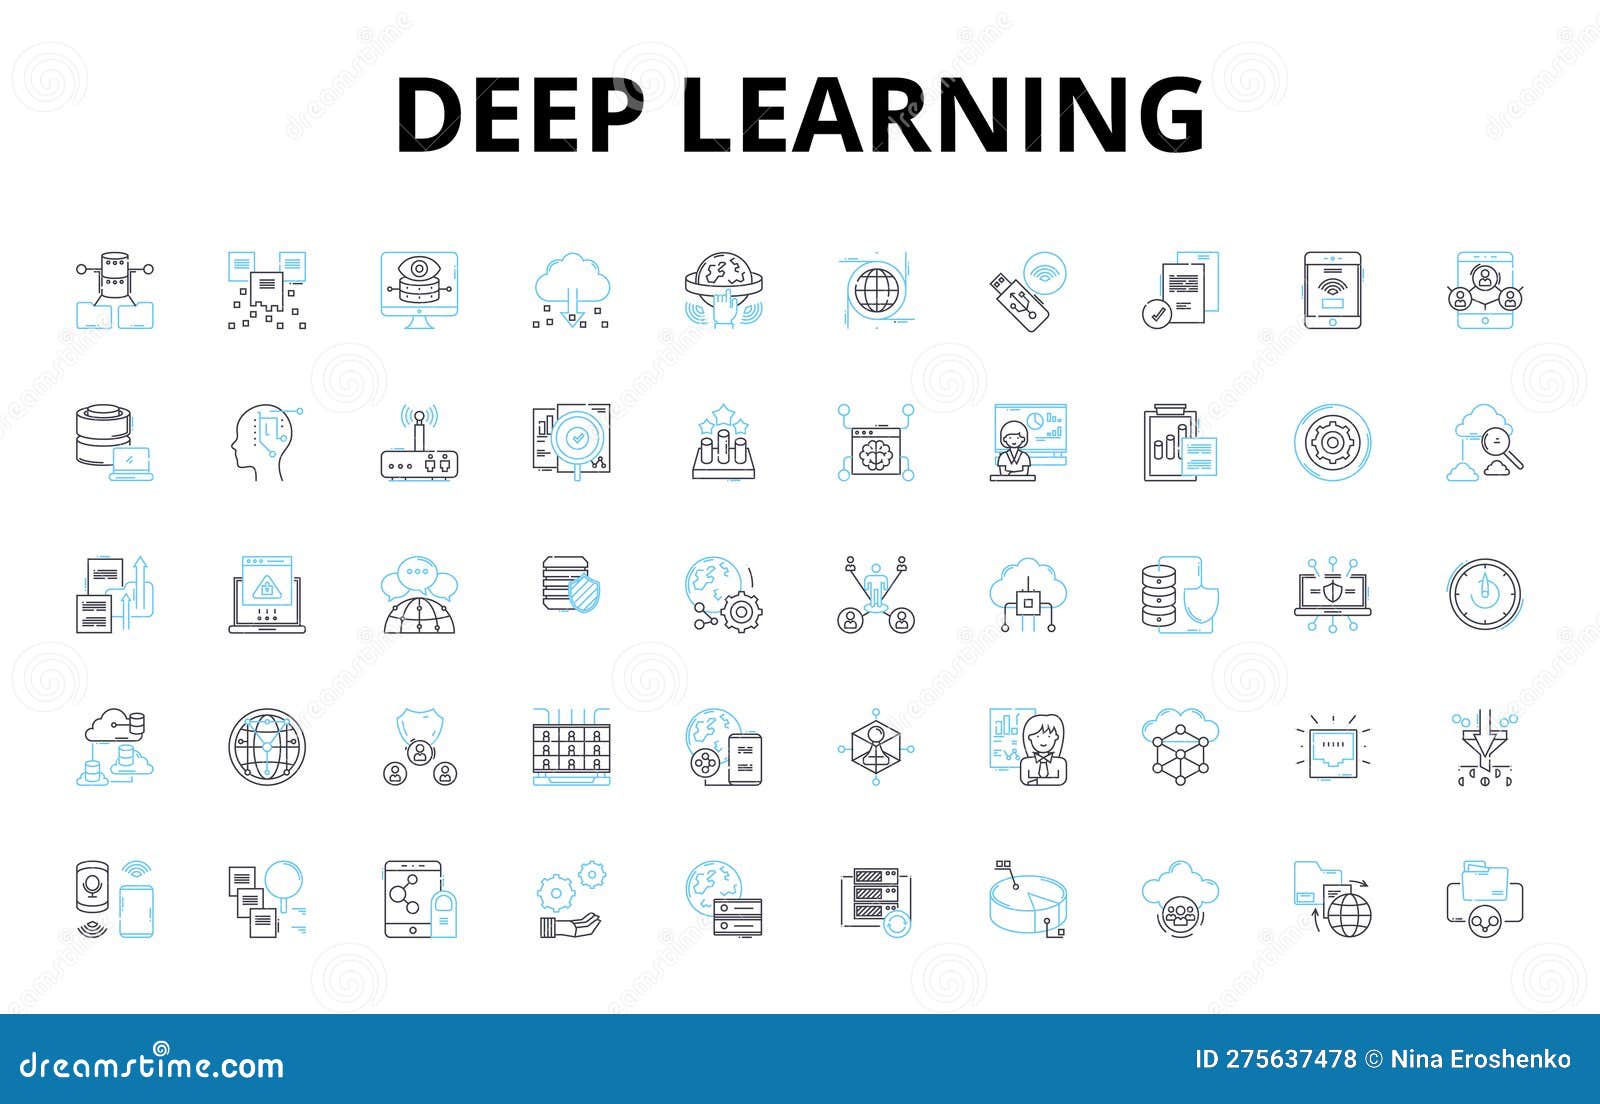 deep learning linear icons set. neural nerks, tensorflow, algorithms, big data, training, optimization, computer vision